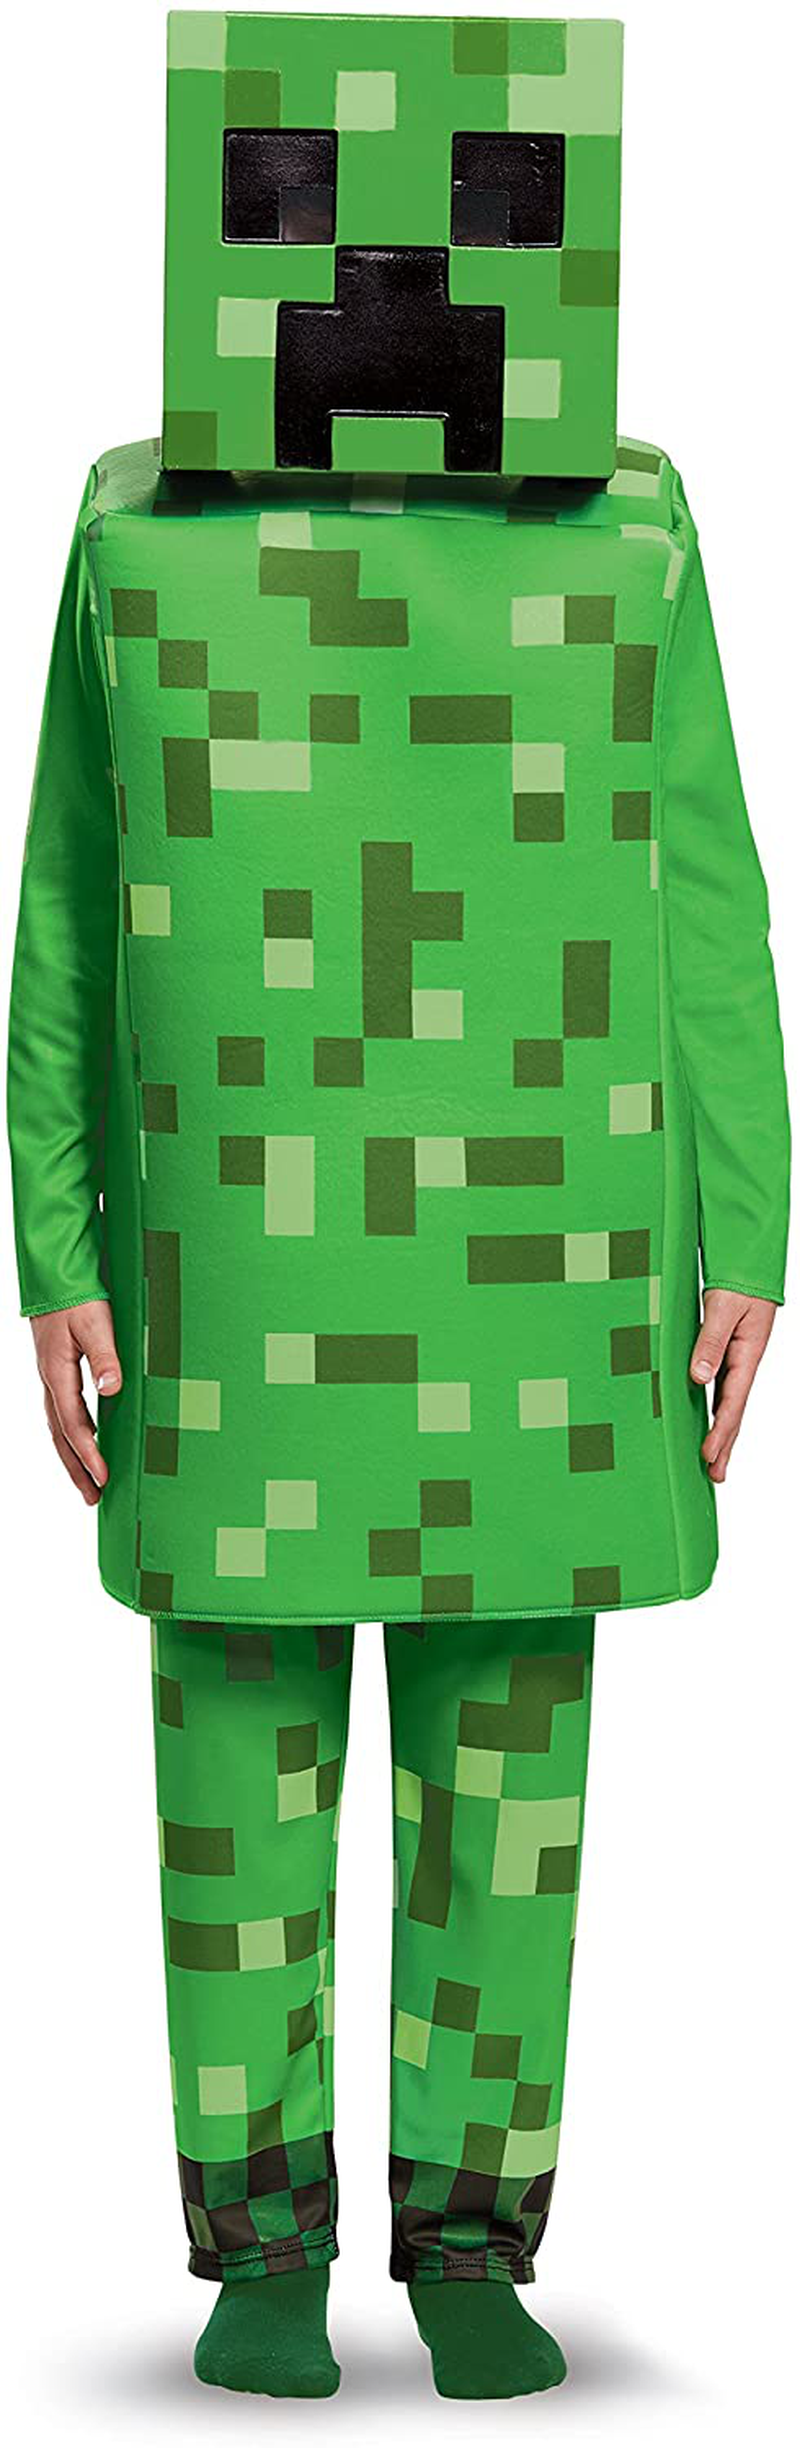 Creeper Deluxe Minecraft Costume, Green, Medium (7-8) Apparel & Accessories > Costumes & Accessories > Costumes Disguise Costume M (7-8) 